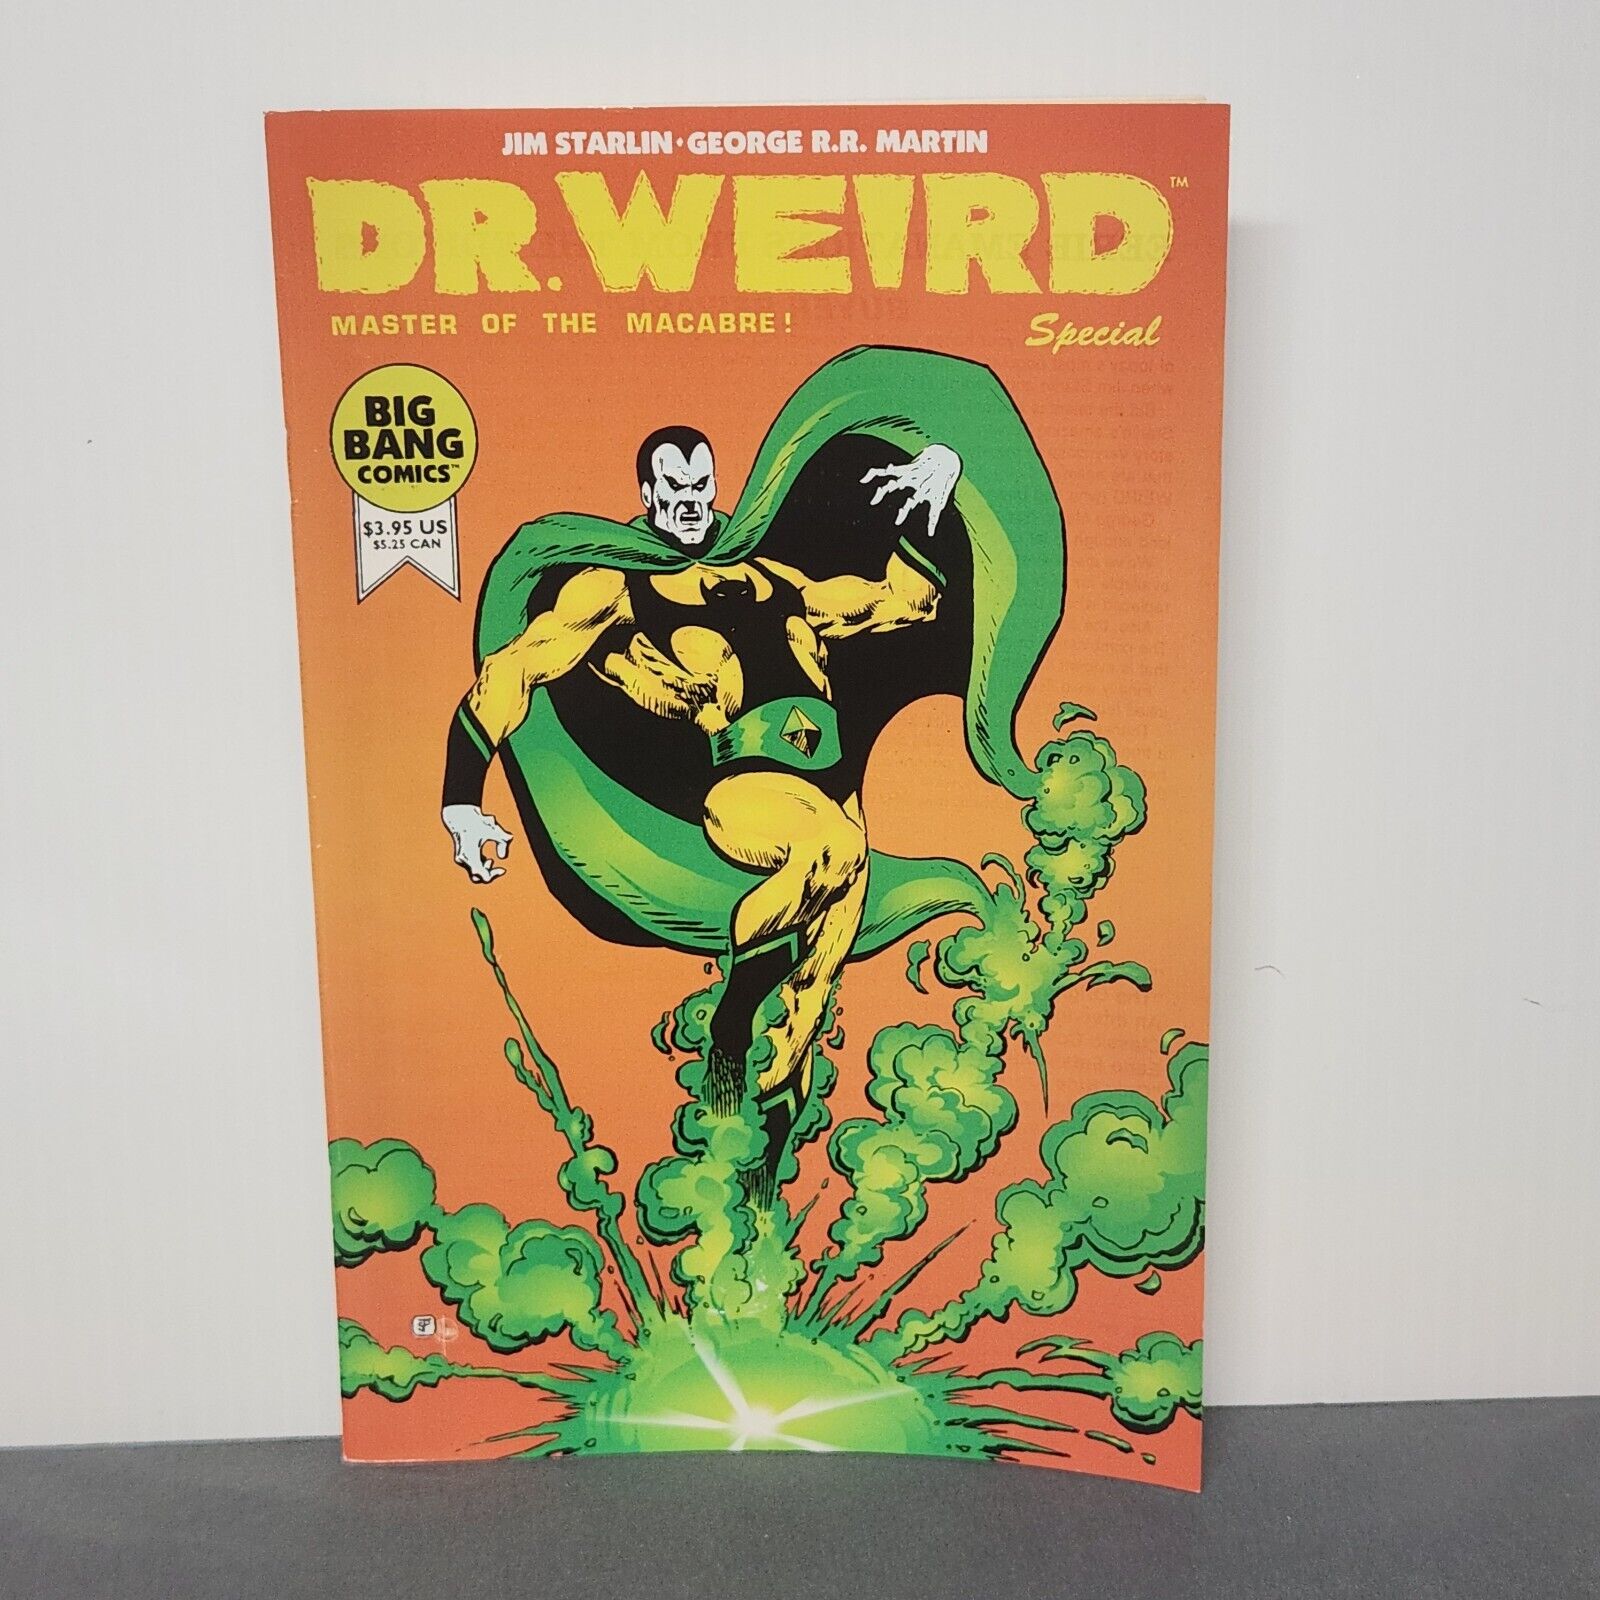 Big Bang Comics 1994 Key Issue #1 Dr Weird Special Edition Comic Book